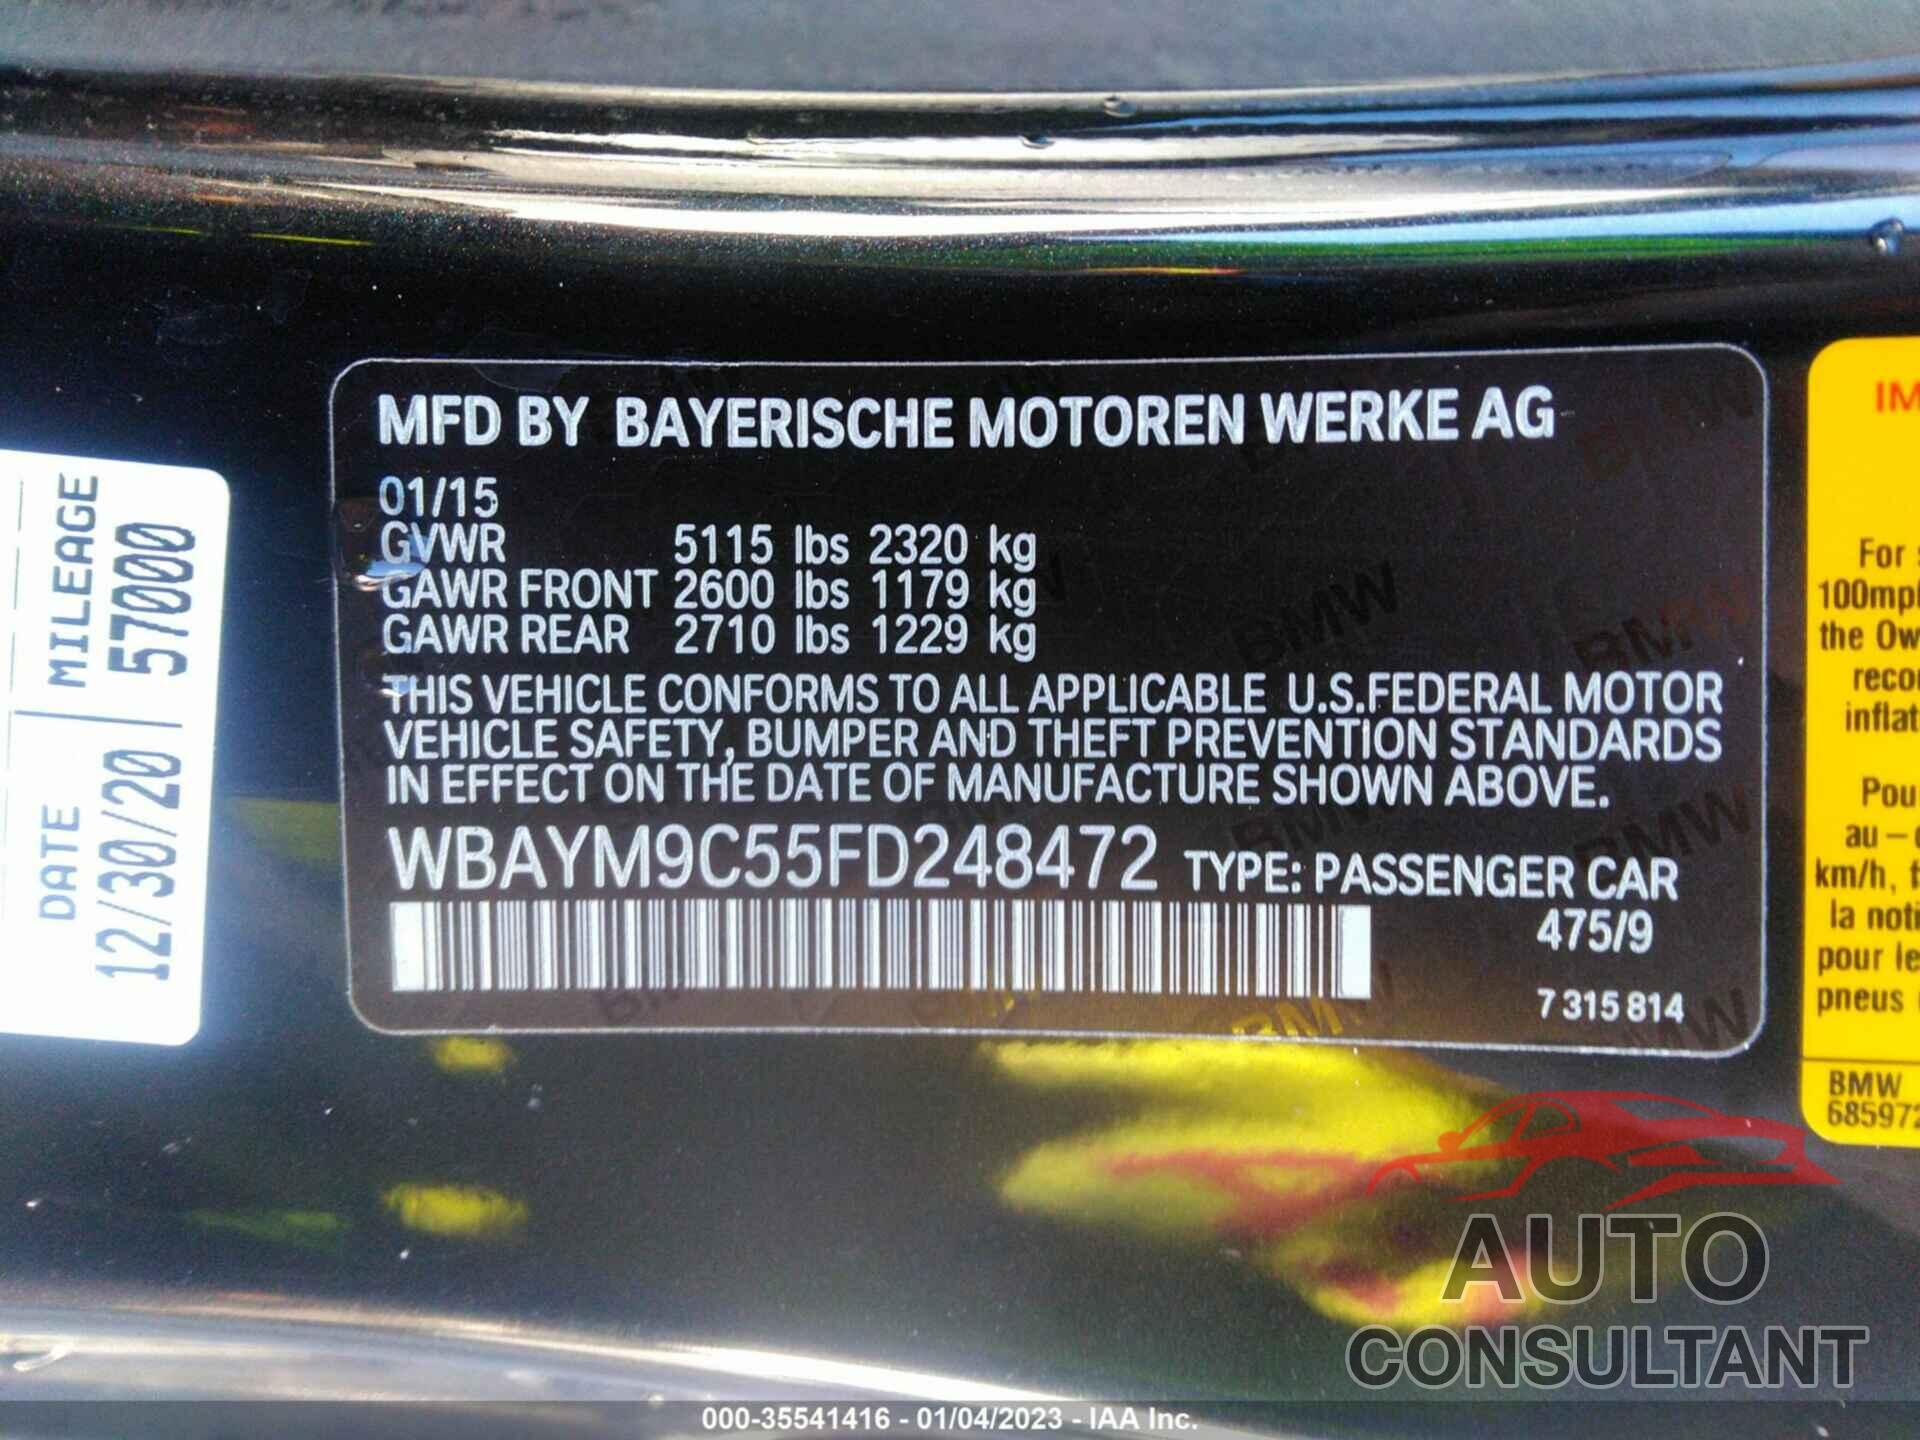 BMW 6 SERIES 2015 - WBAYM9C55FD248472